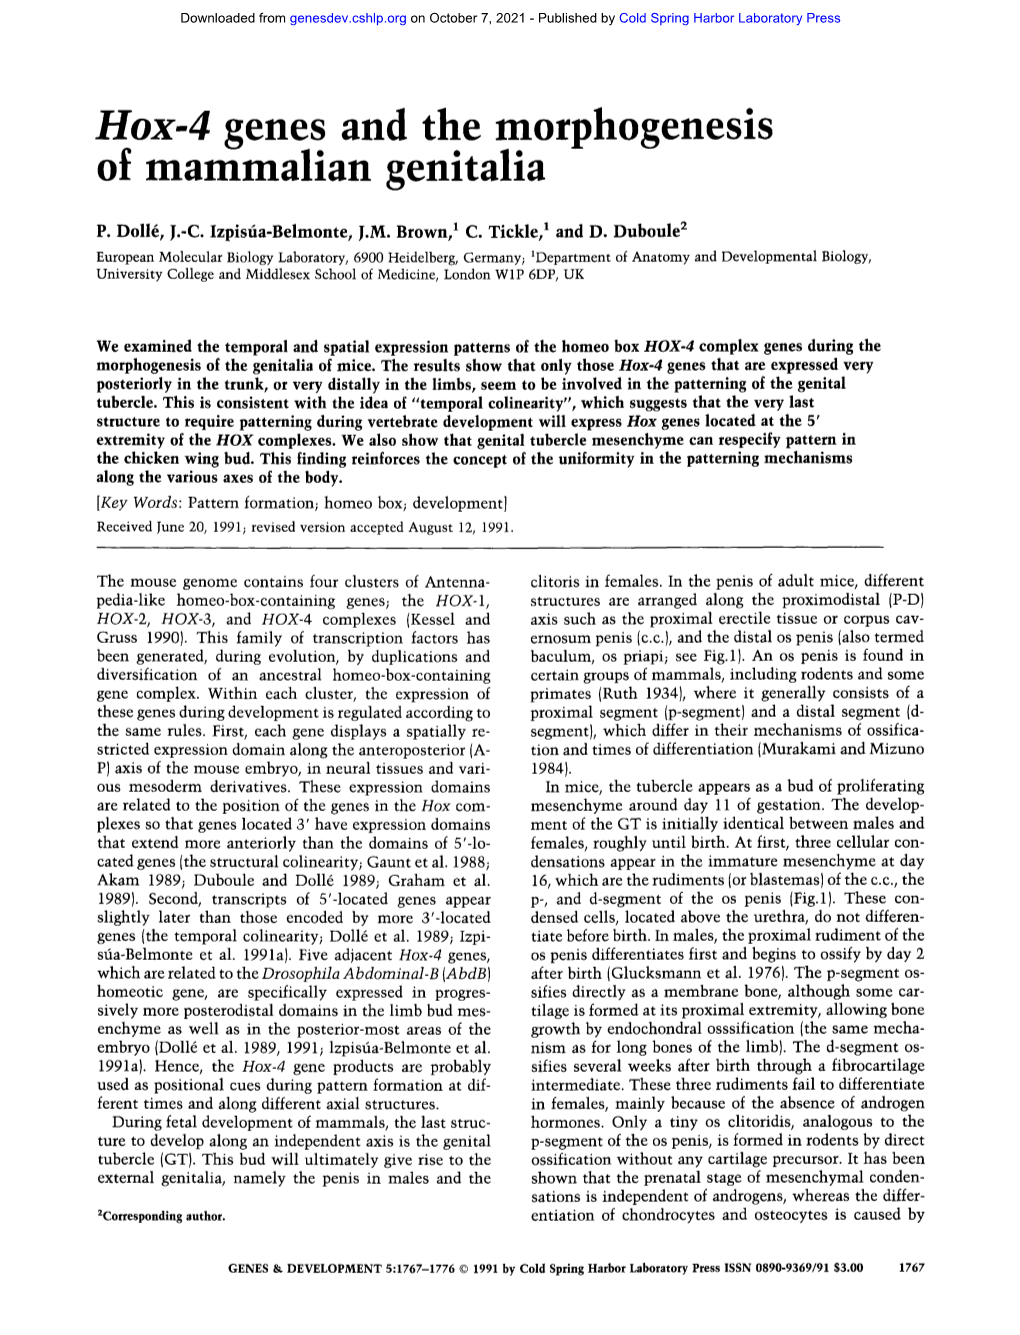 Hox-4 Genes and the Morphogenesis of Mammalian Genitalia